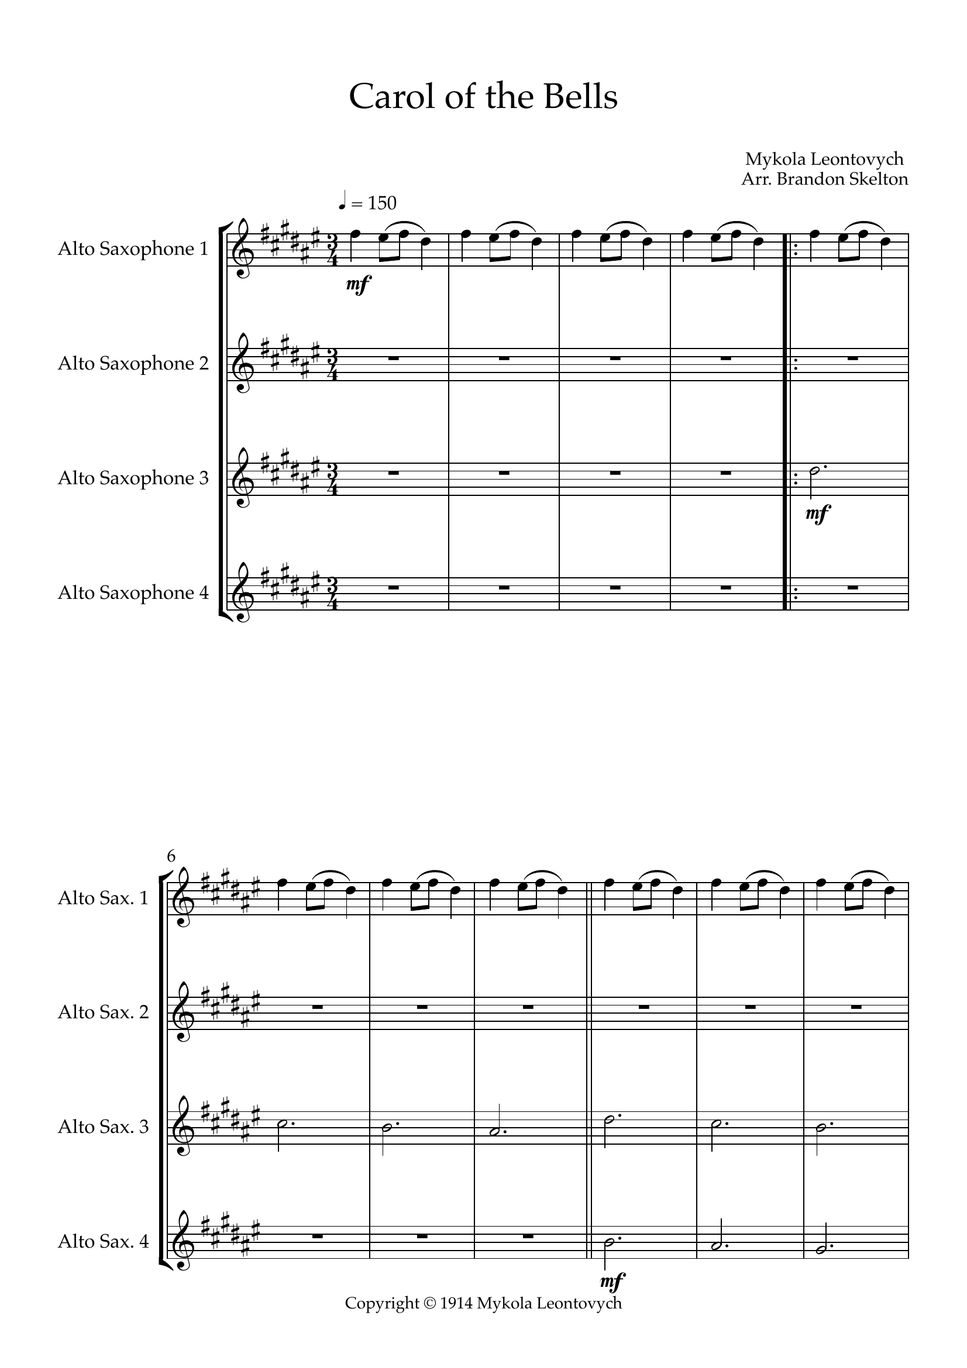 carol-of-the-bells-full-score-by-brandon-skelton